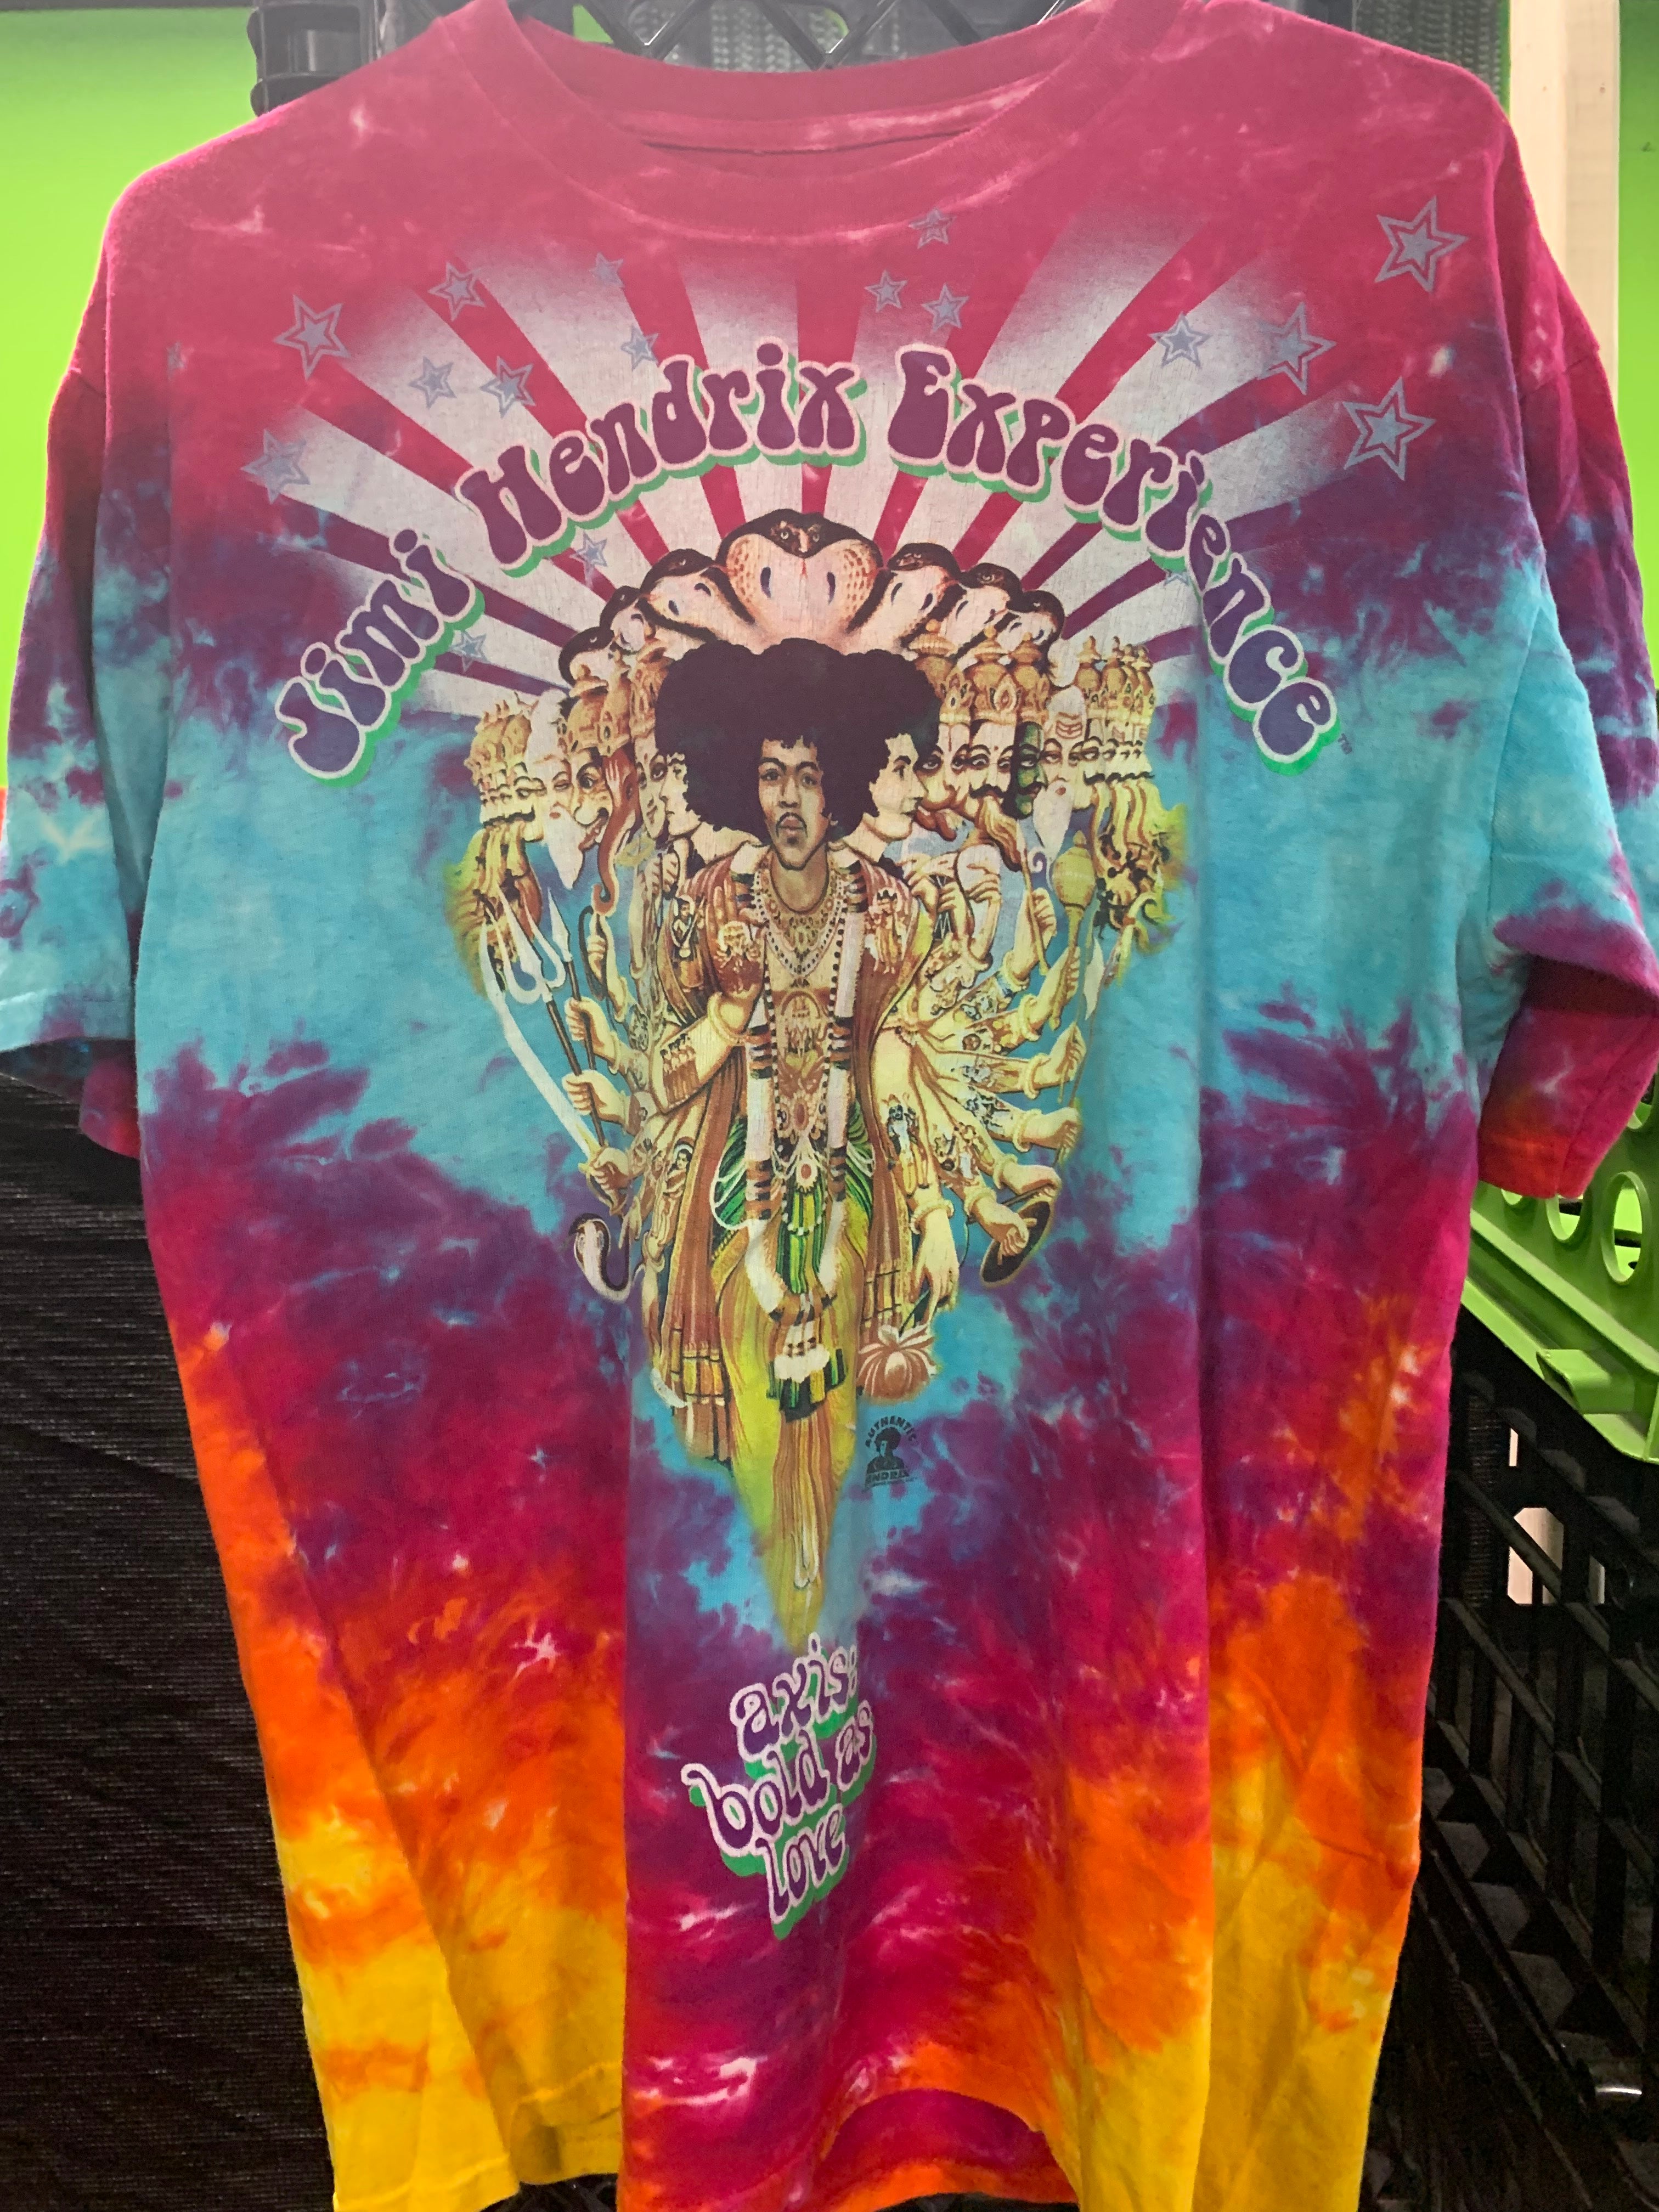 Jimi Hendrix Experience Axis Bold As Love T-Shirt, Rainbow Tie Dye, M